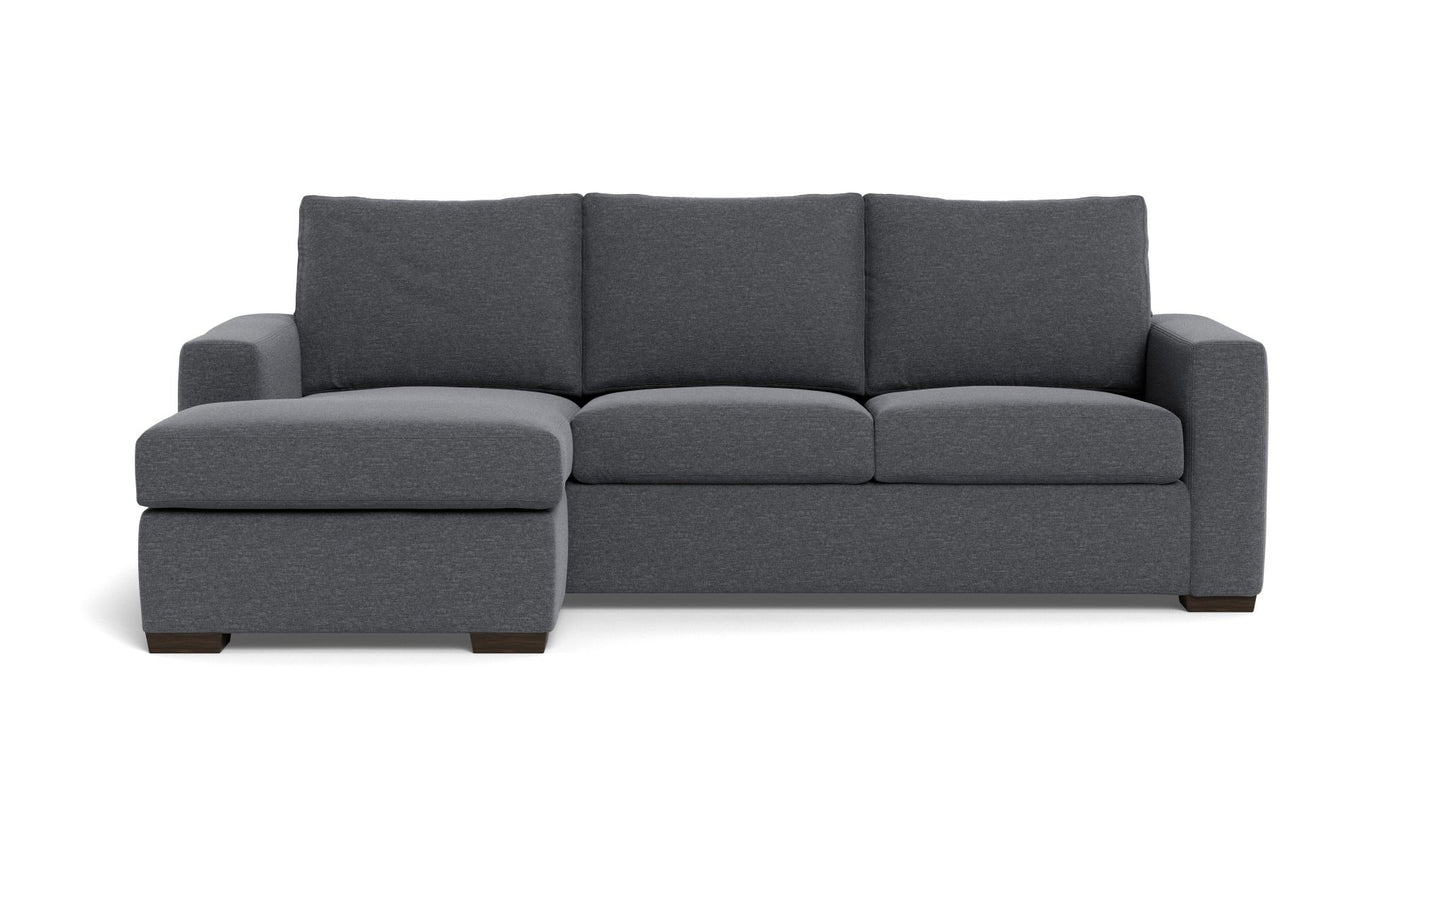 Mesa Reversible Chaise Sofa - Bennett Charcoal